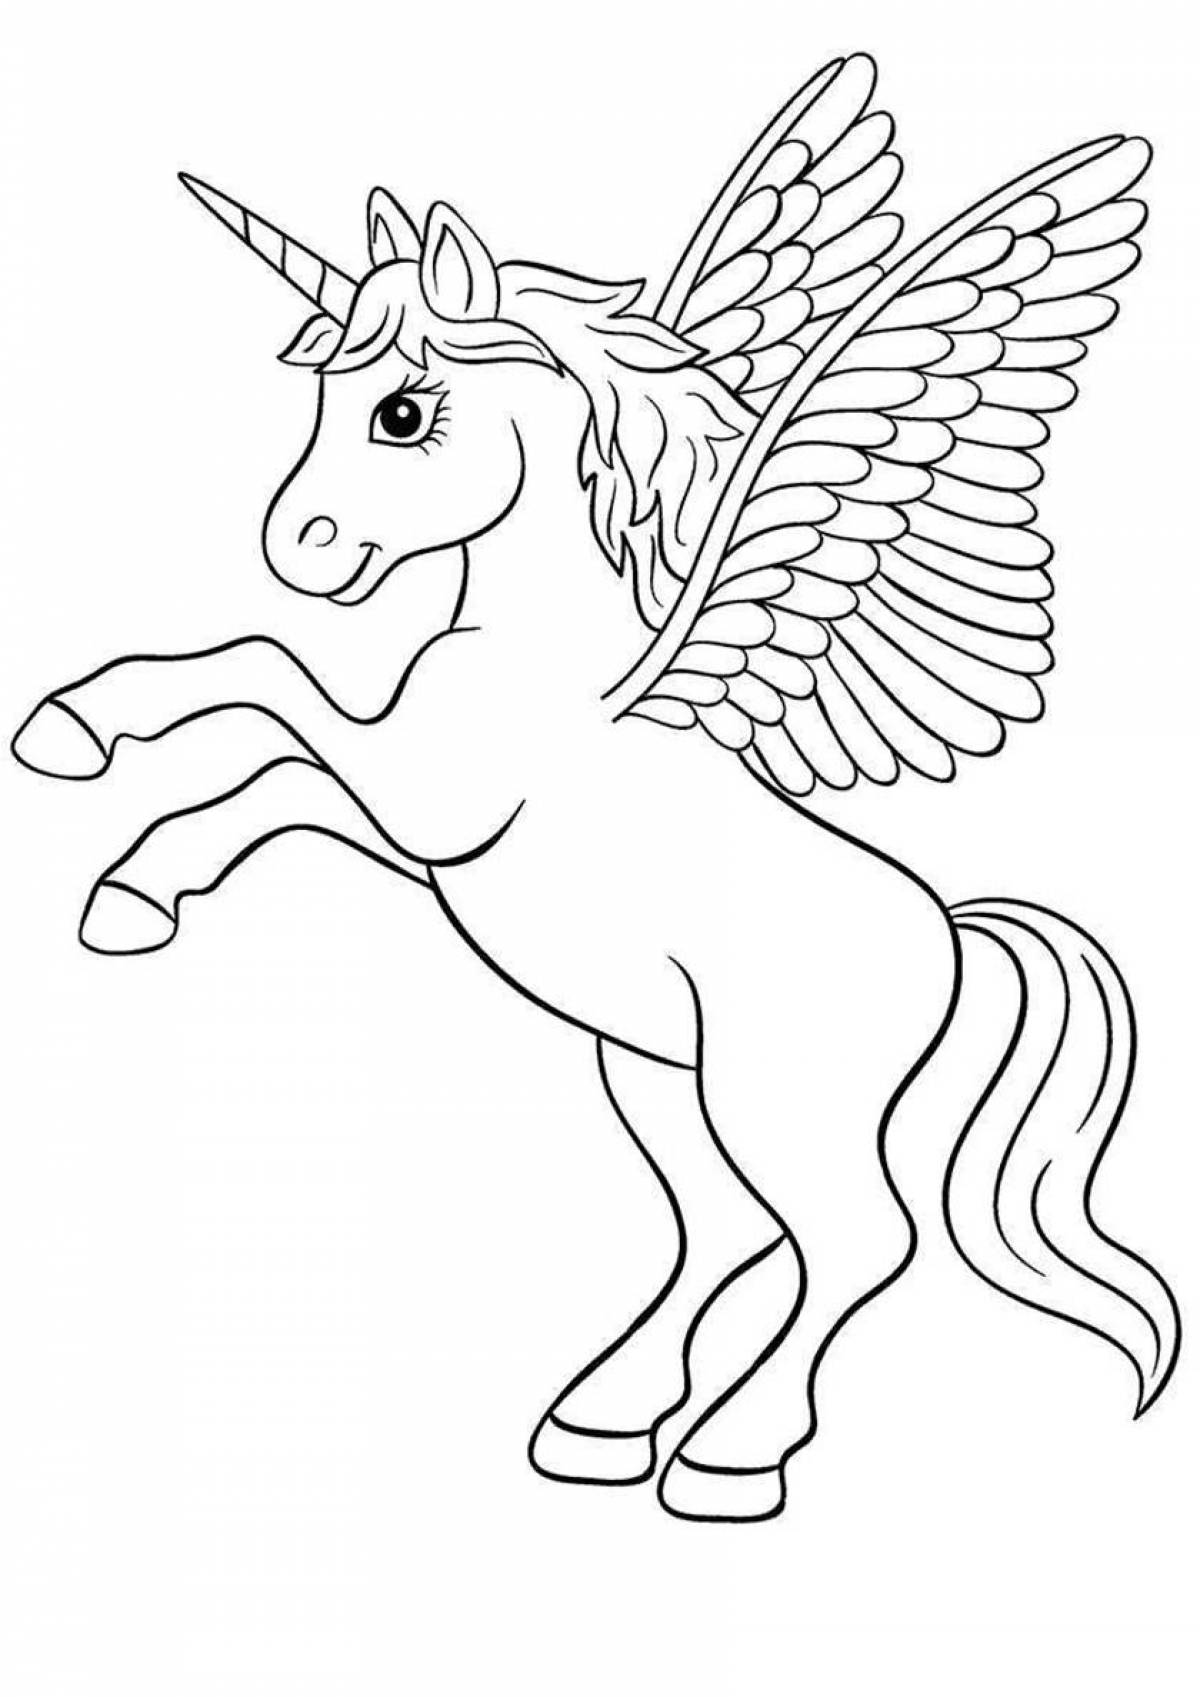 Joyful unicorn coloring book for kids